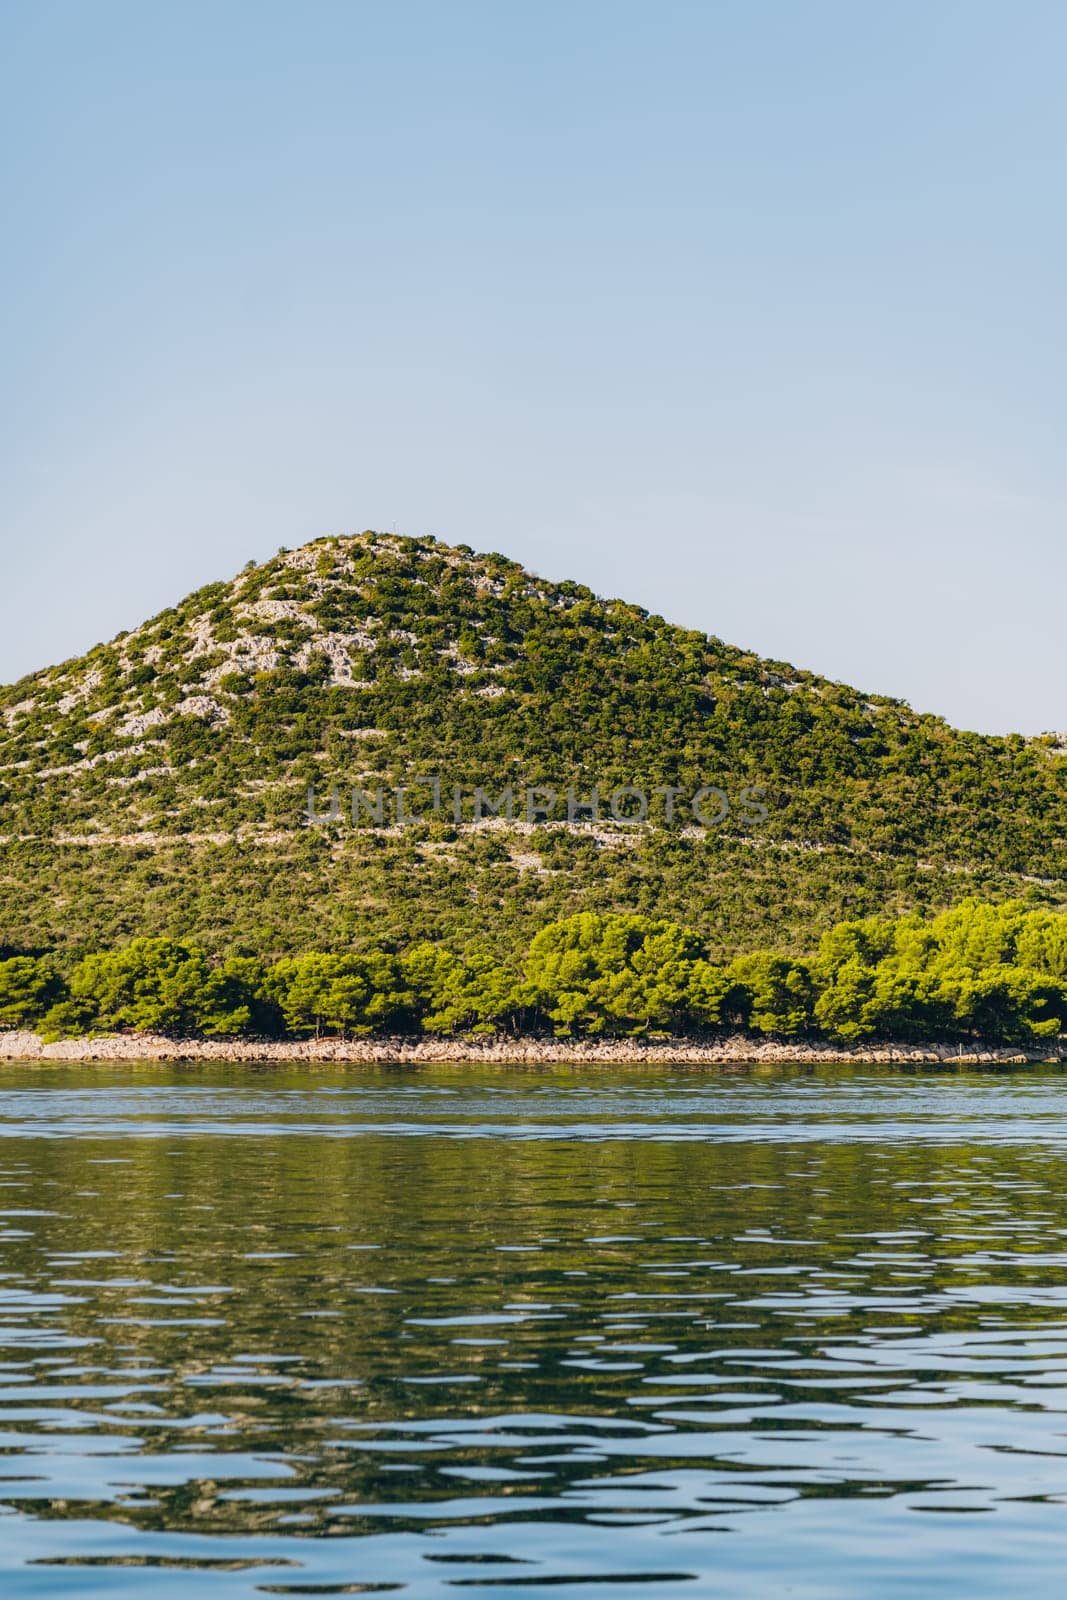 Pine trees on hill and rocky beach Dugi Otok island in Croatia by Popov